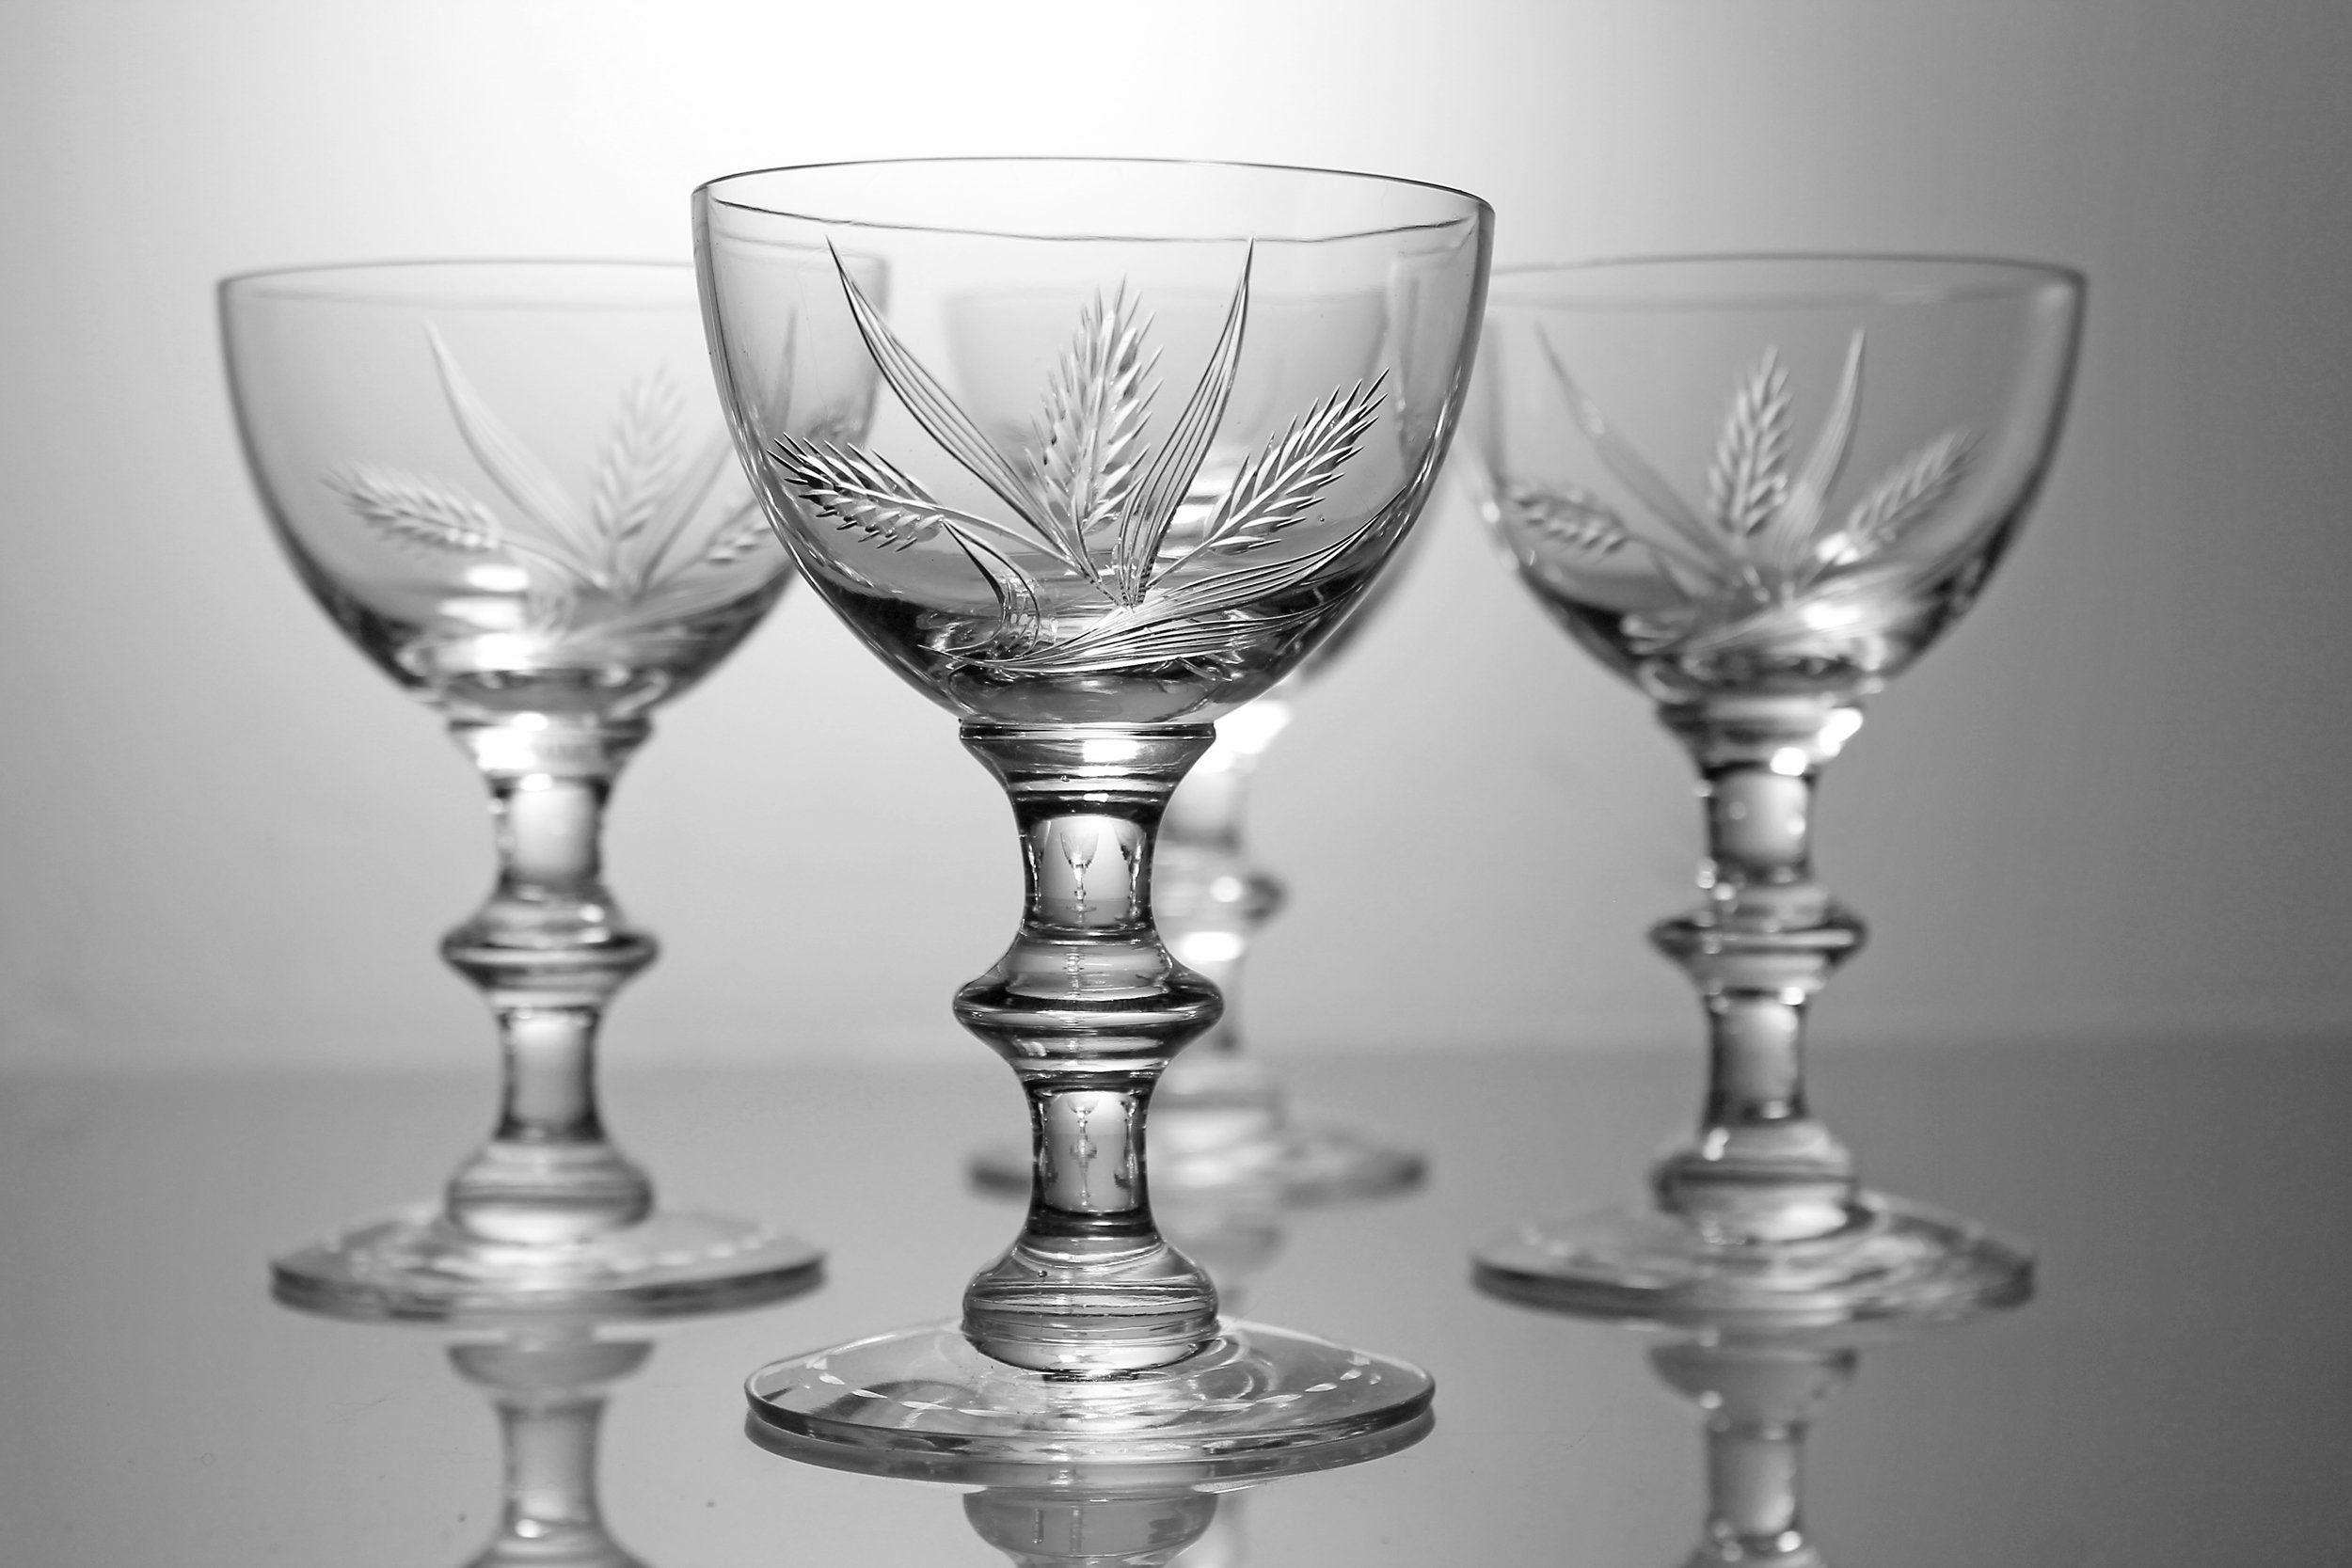 4 Antique Wine Glasses Vintage Pressed Glass Square Stem Wine -  Norway